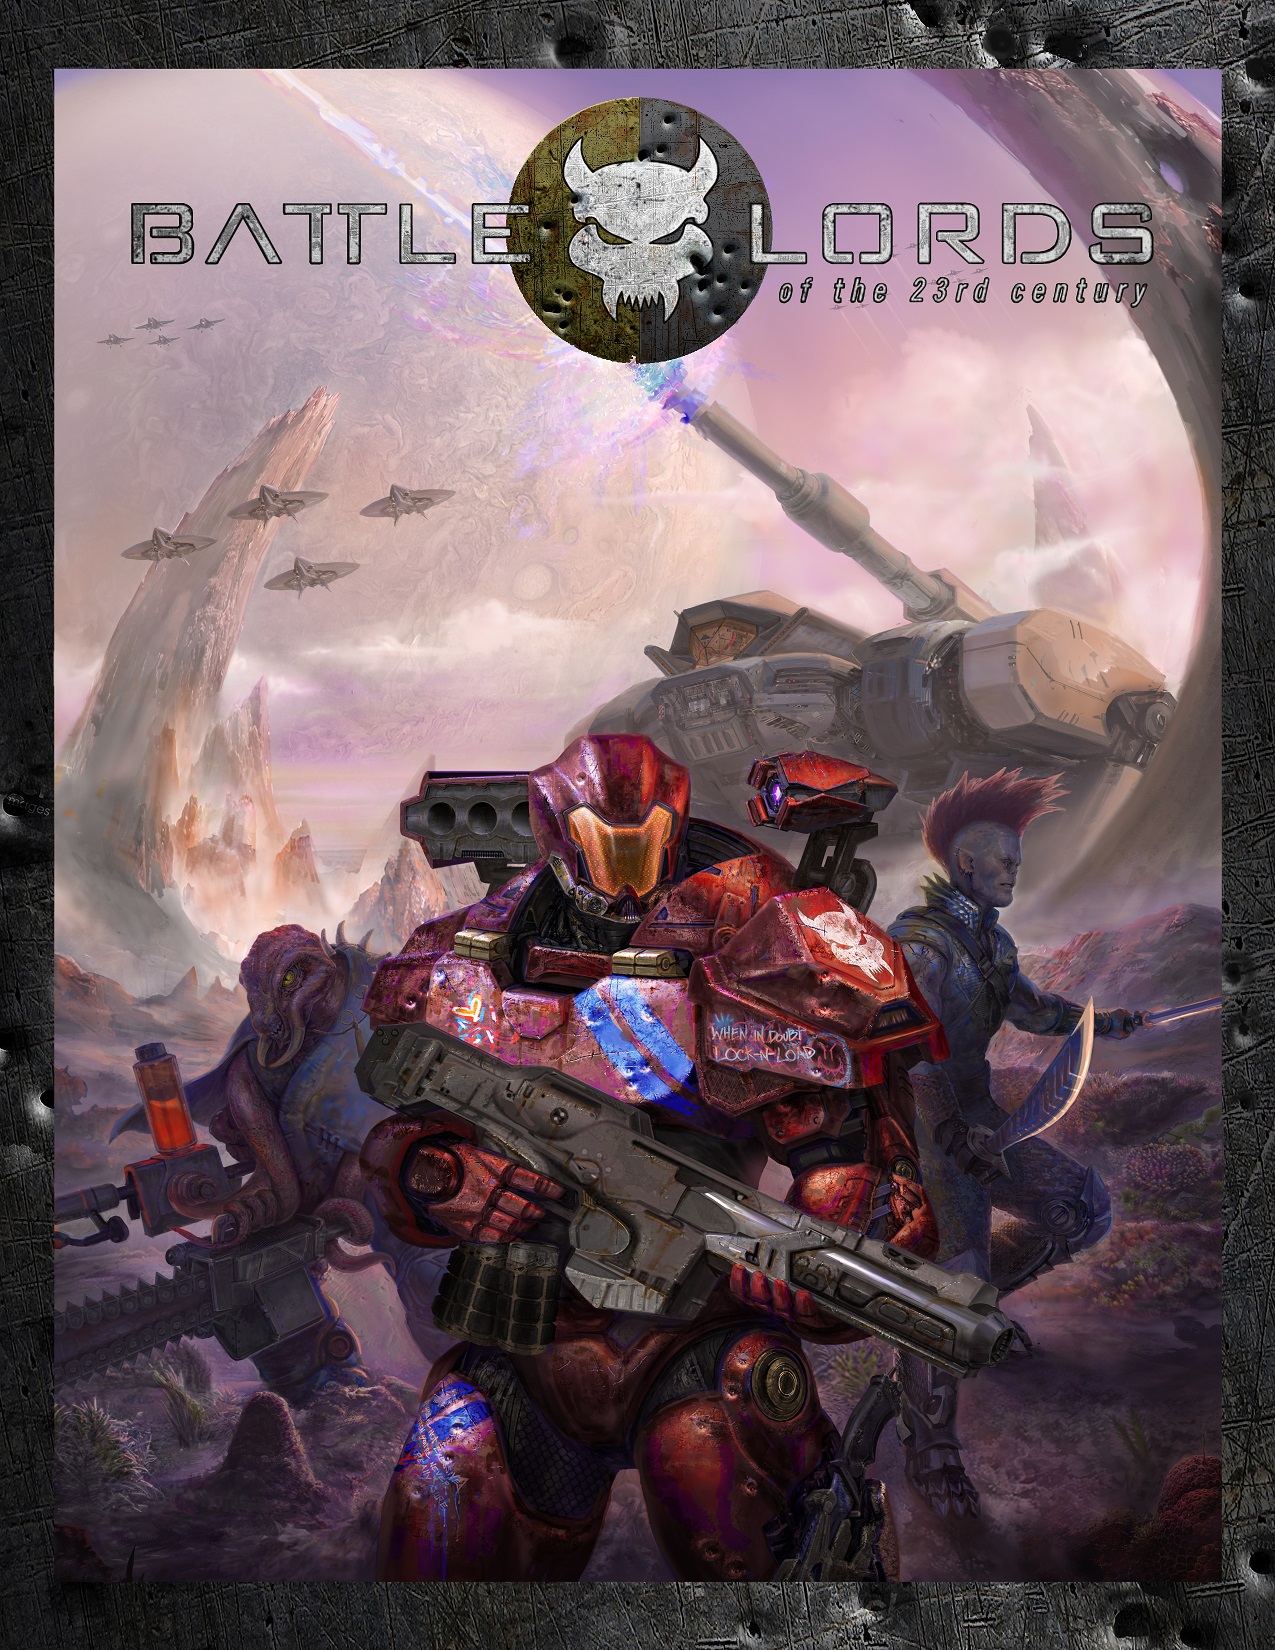 Battlelords_coverart-heavy_bloodred-border&logo (Low Res).jpg